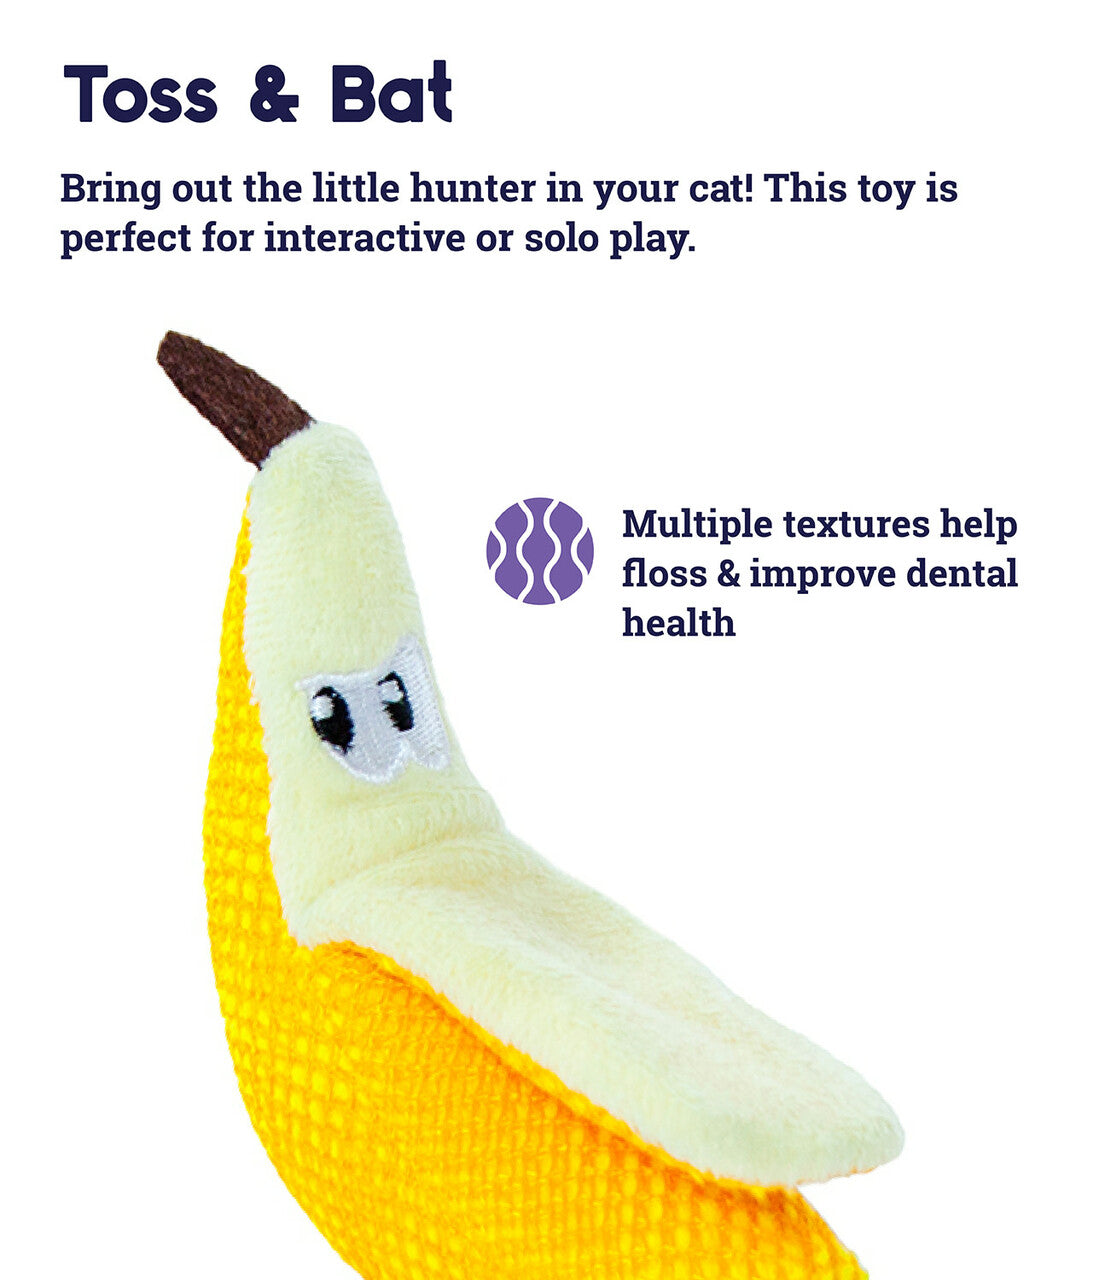 Petstages Cat Banana Toy, 21 cm - Petsgool Online